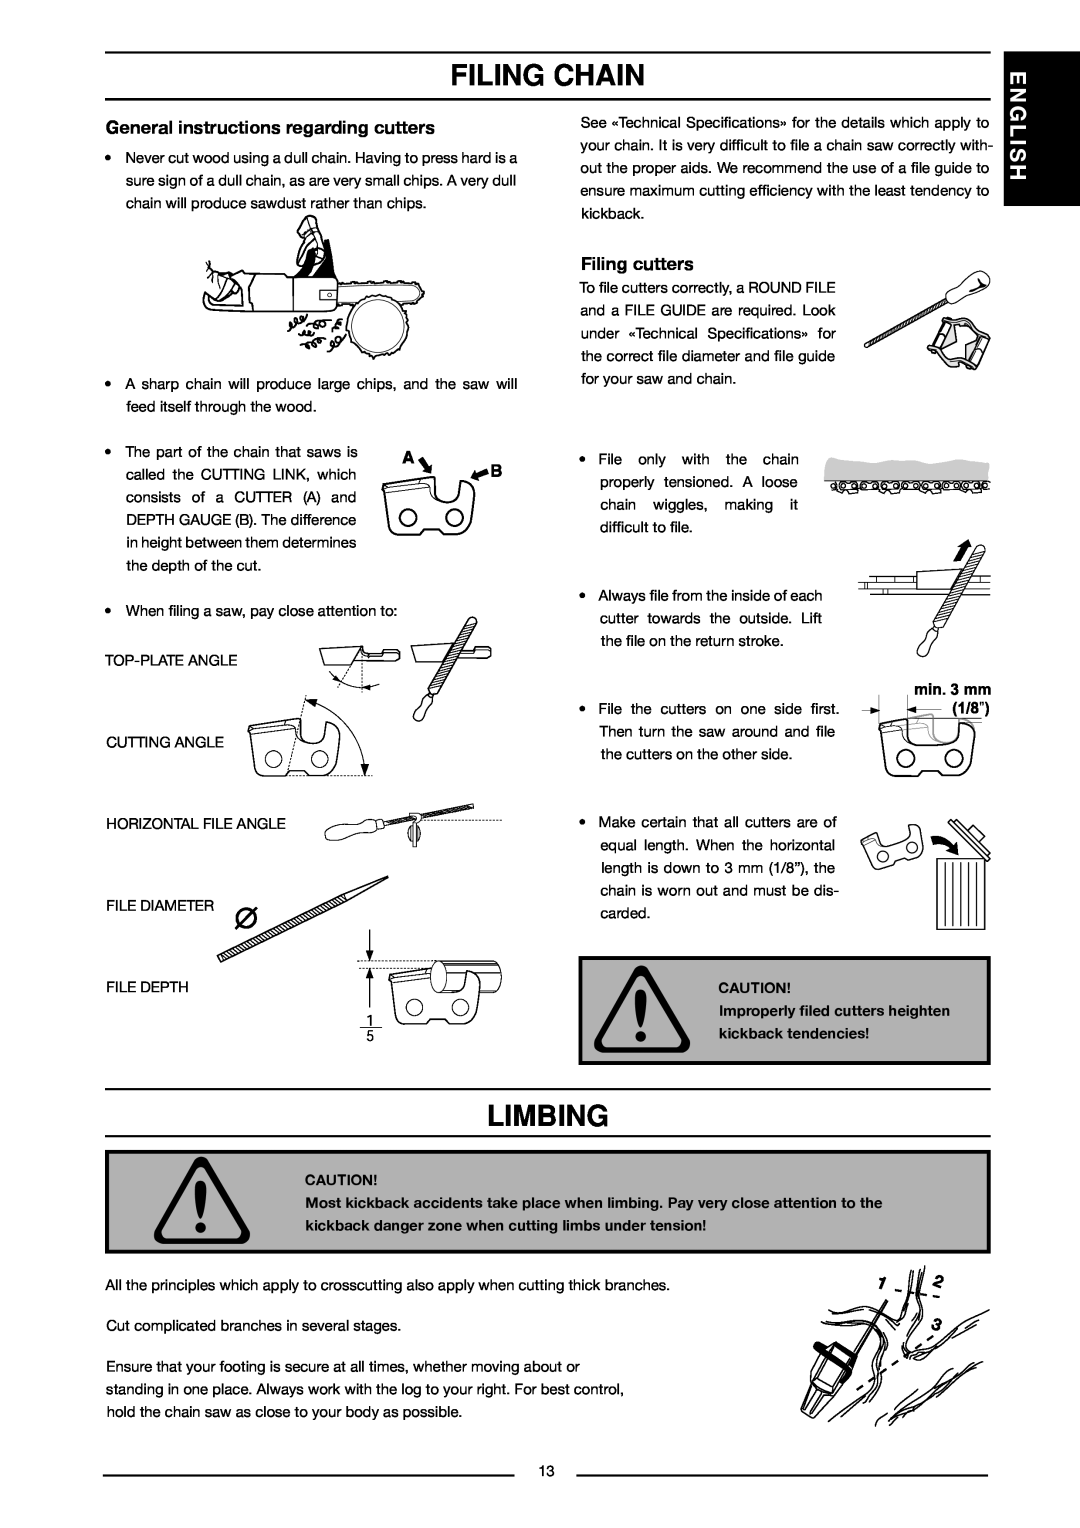 Husqvarna 317 EL, 321 EL manual Filing Chain, Limbing, English, General instructions regarding cutters, Filing cutters 